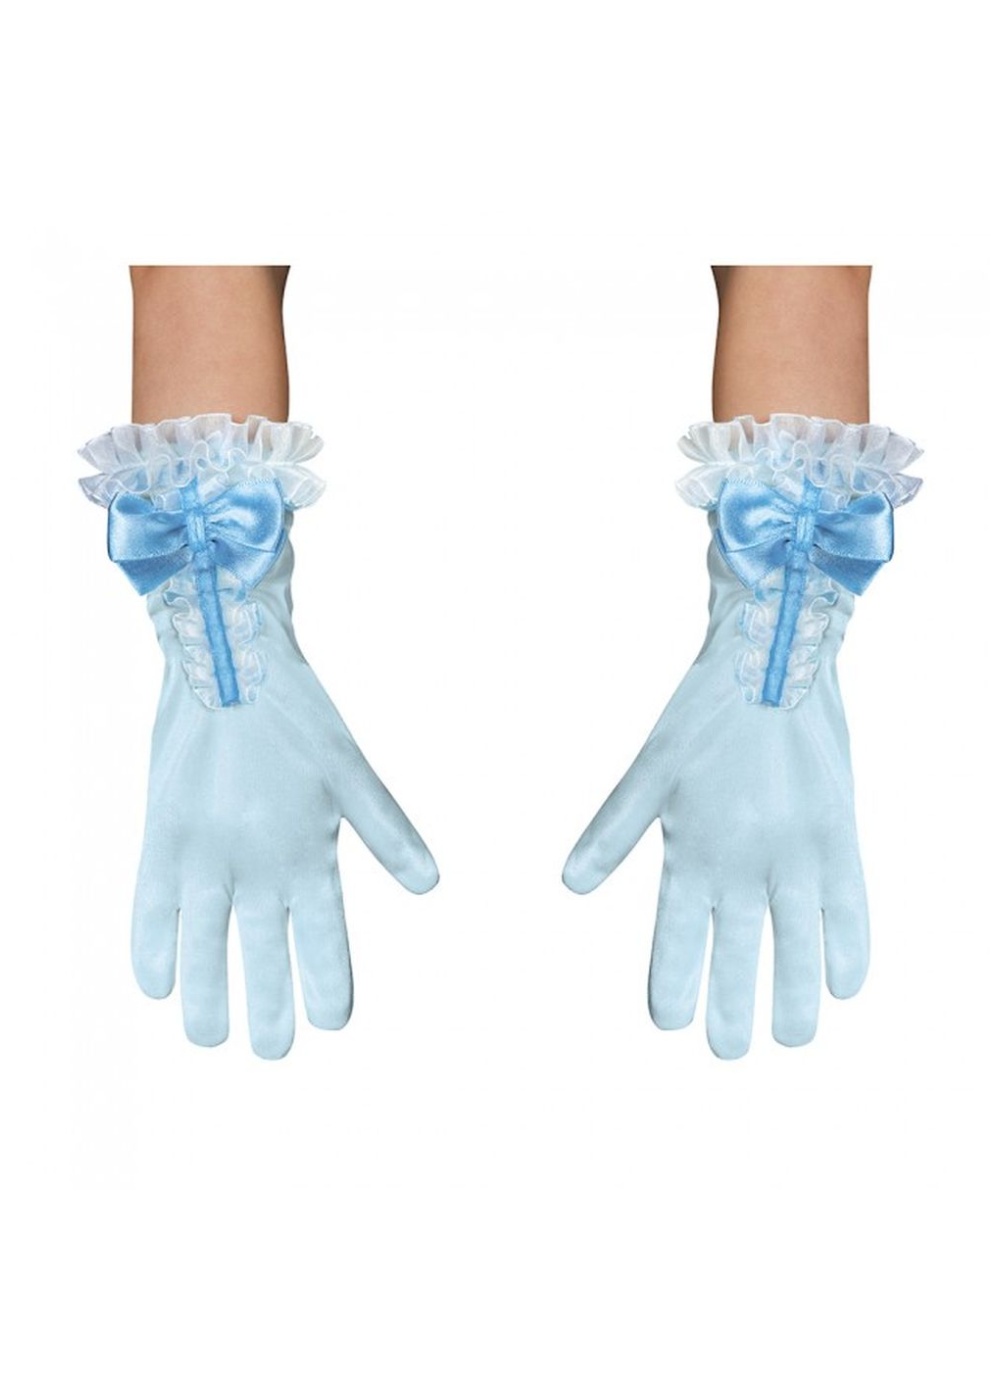  Princess Cinderella Baby Gloves